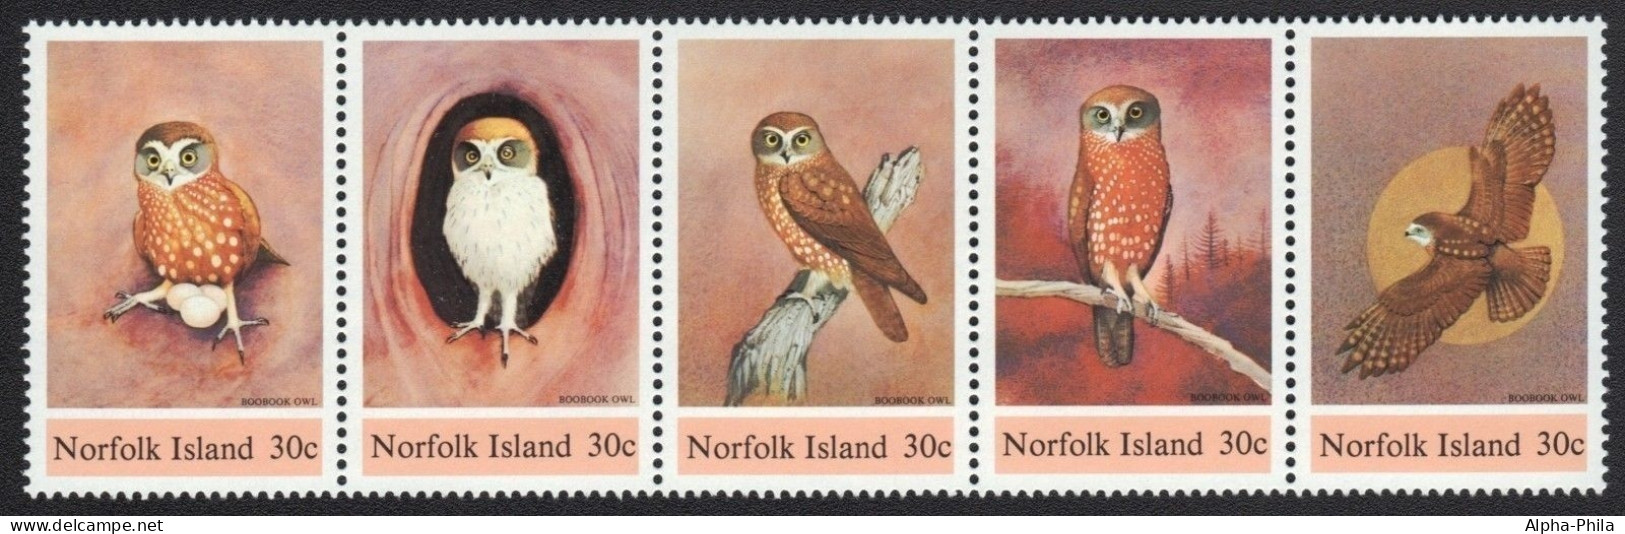 Norfolk-Insel 1984 - Mi-Nr. 339-343 ** - MNH - Eulen / Owls - Norfolk Island